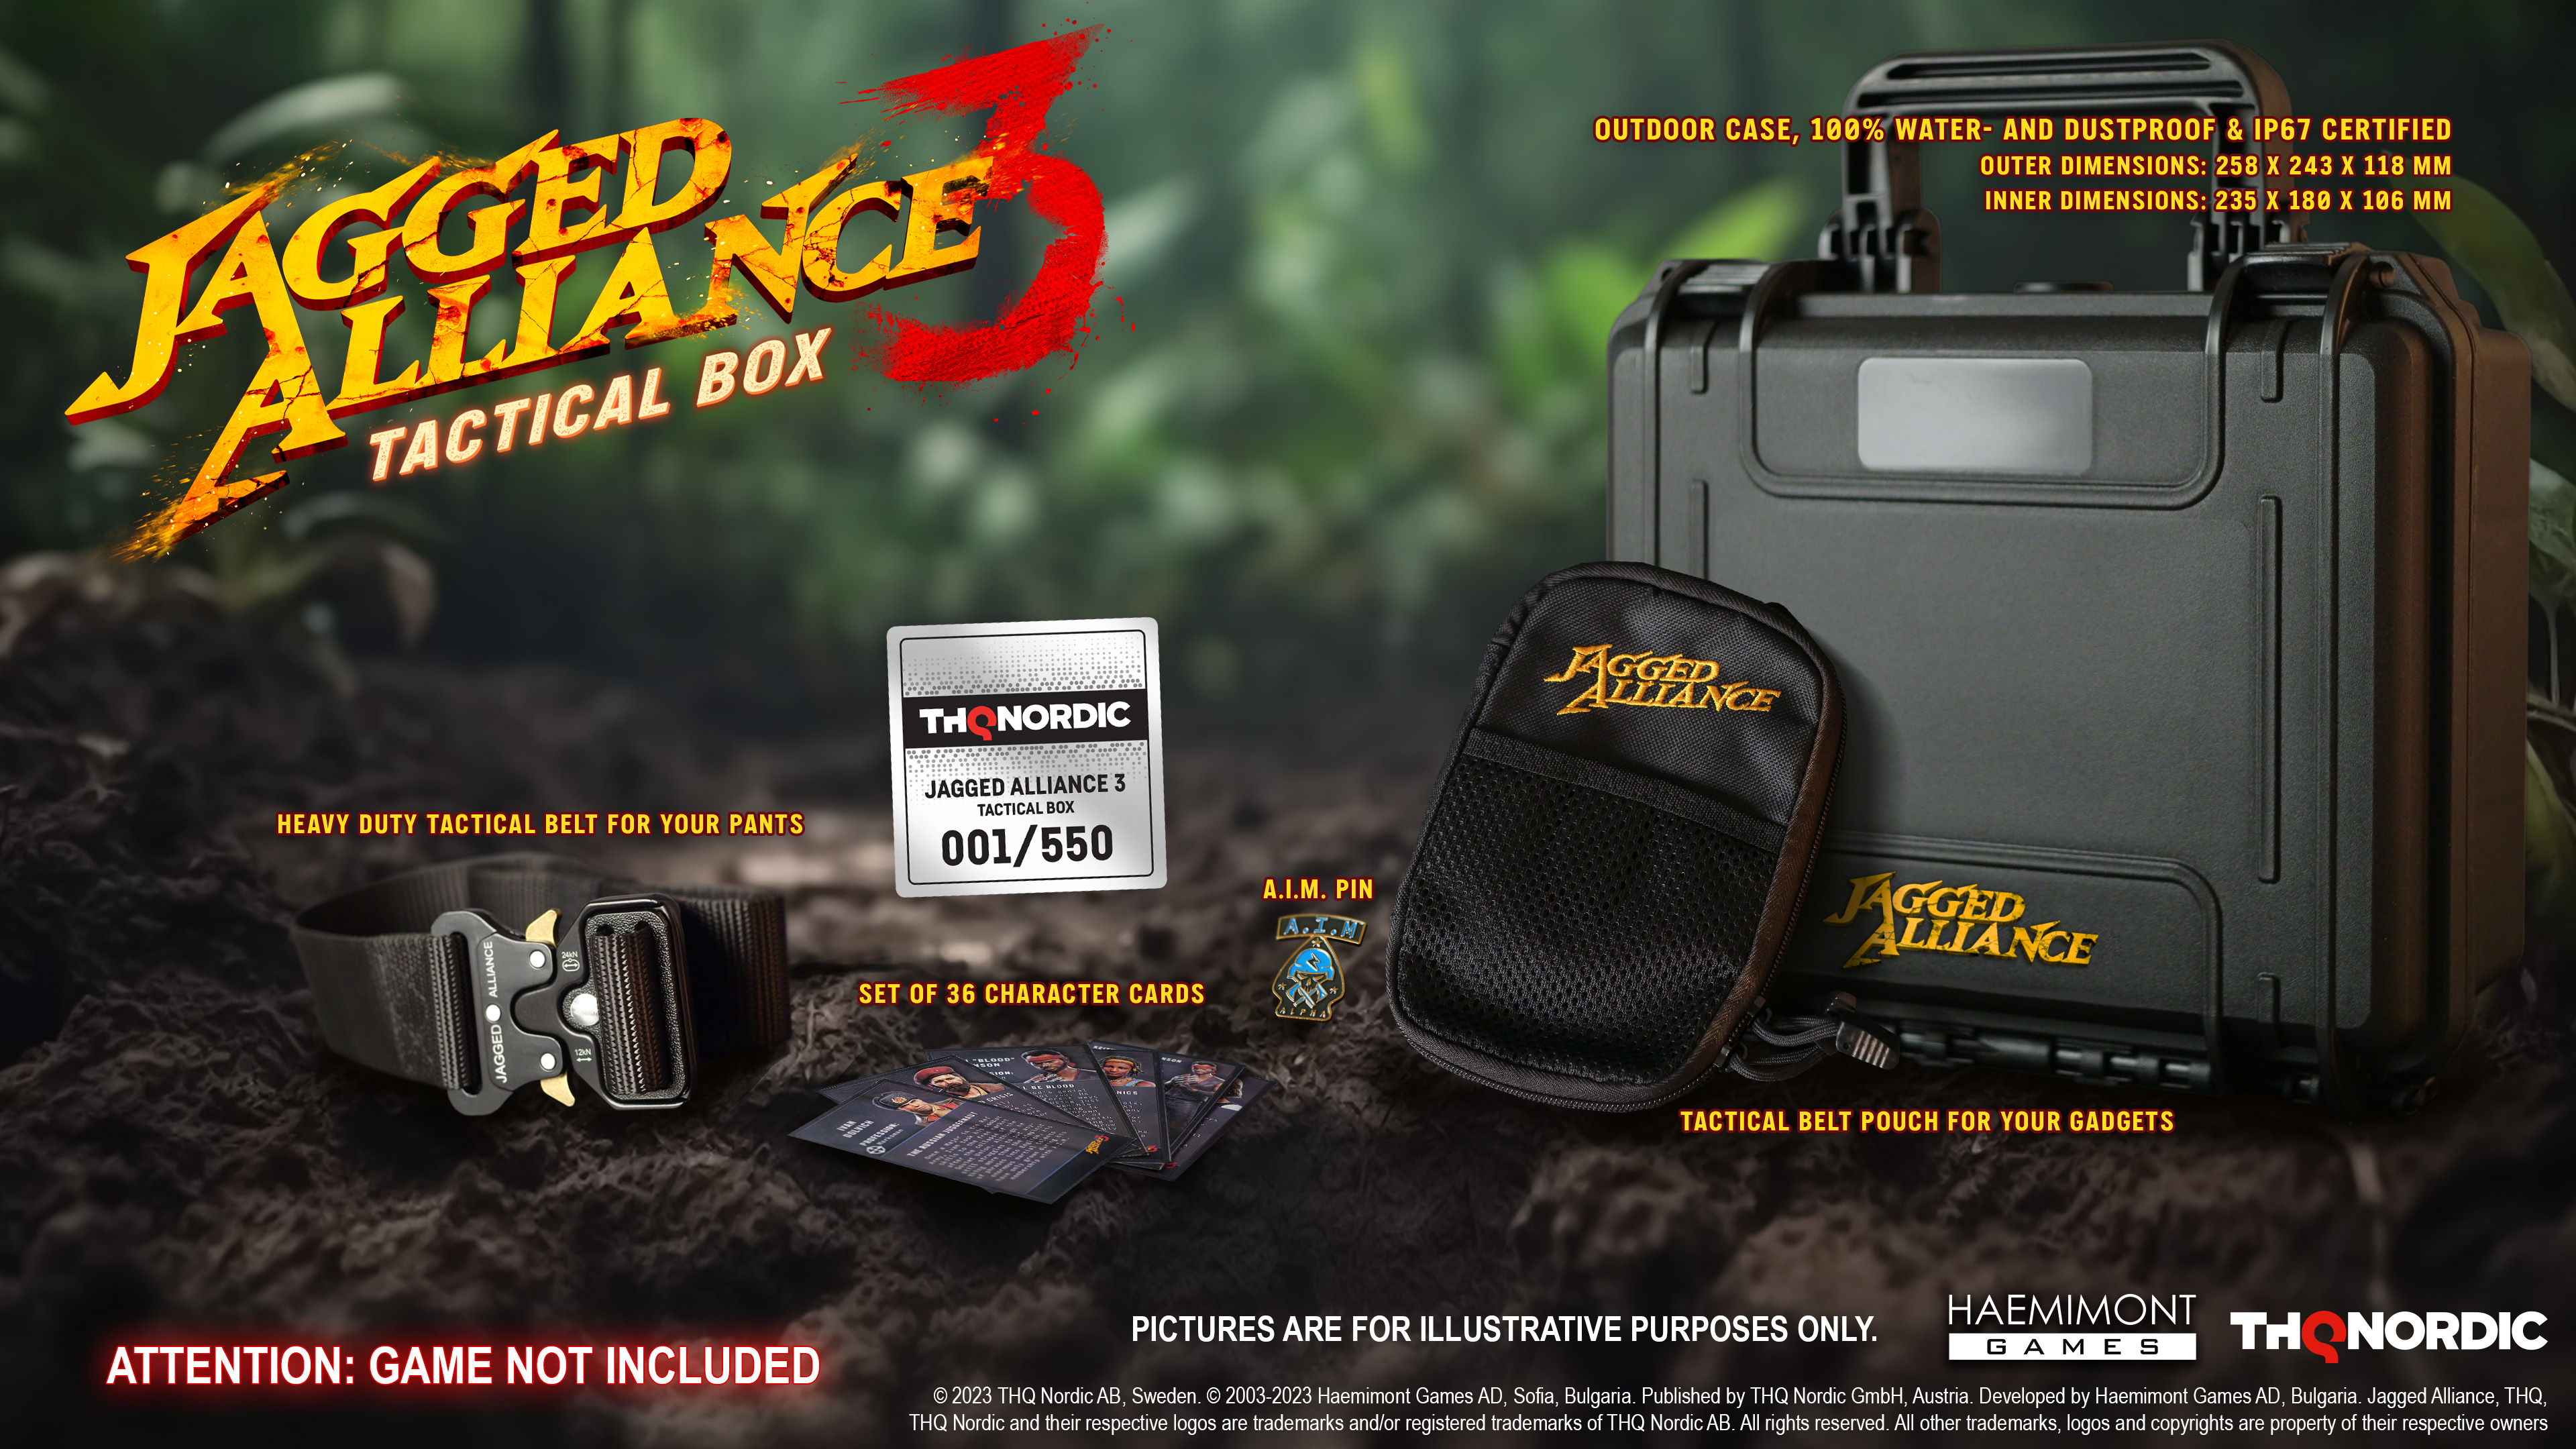 Jagged Alliance 3 - Tactical Box